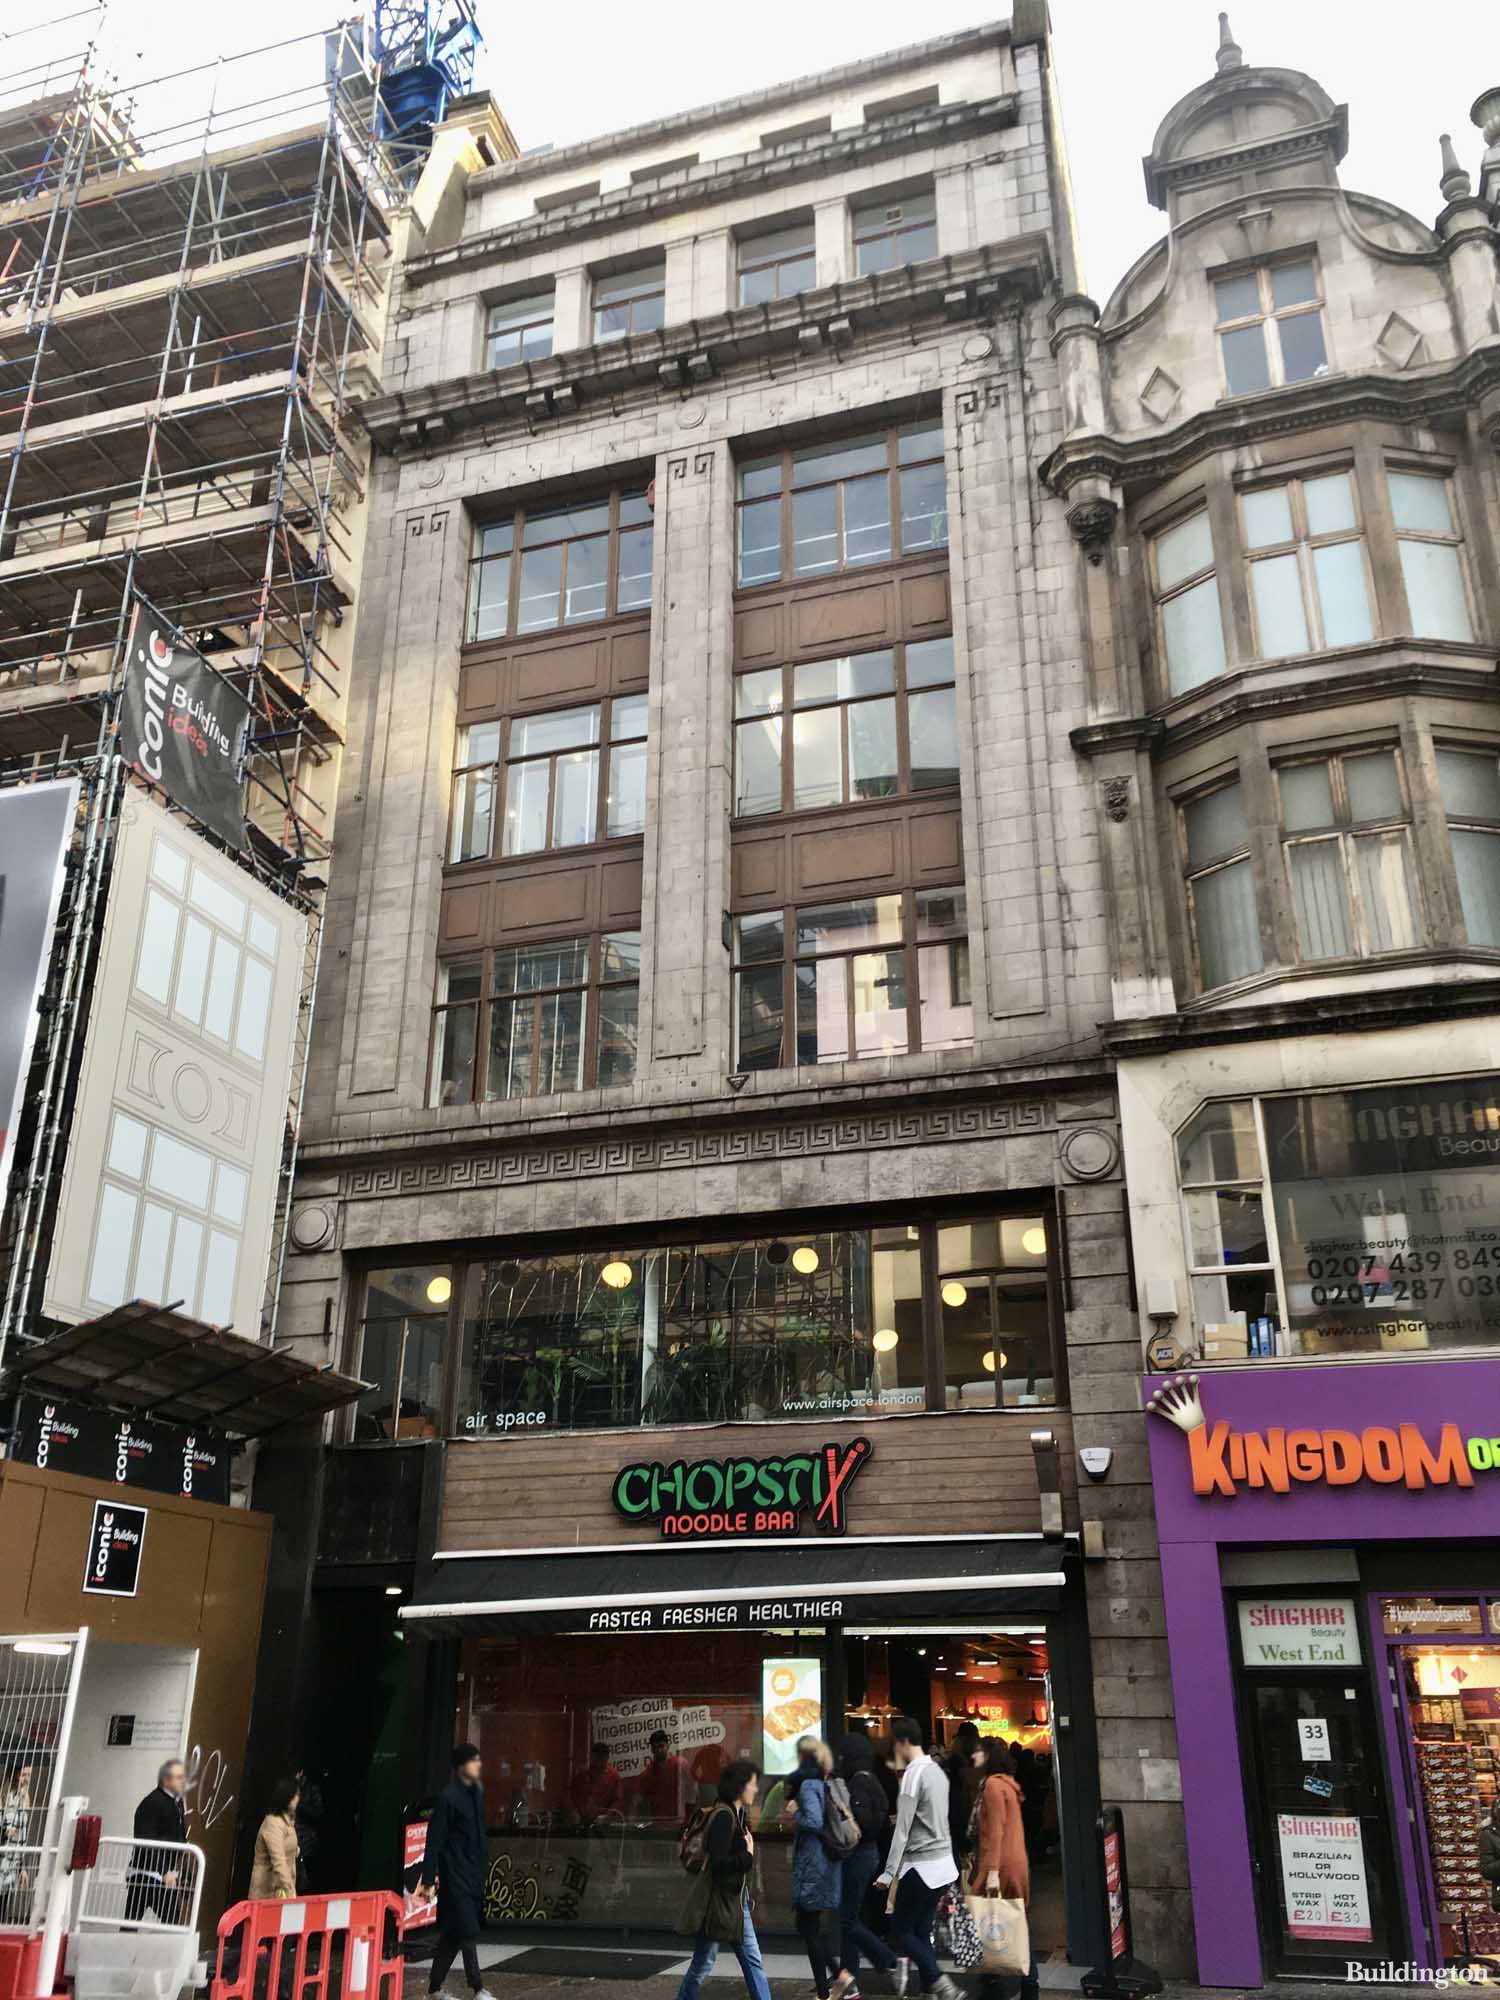 Chopstix on the ground floor 29-31 Oxford Street building in London W1.